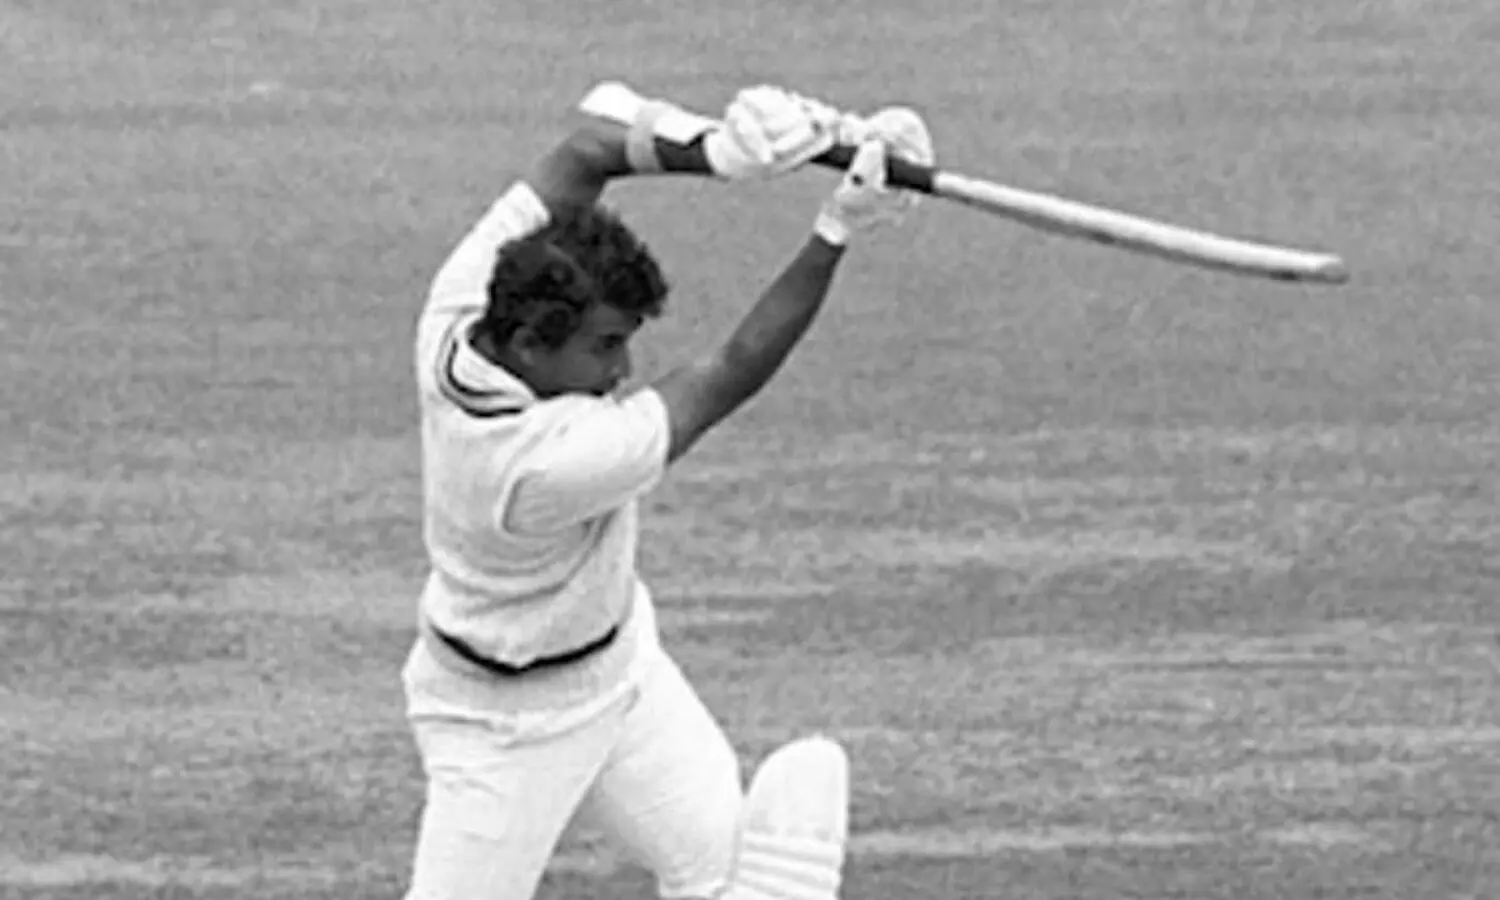 Sunil Gavaskar scored 36 runs in 174 balls